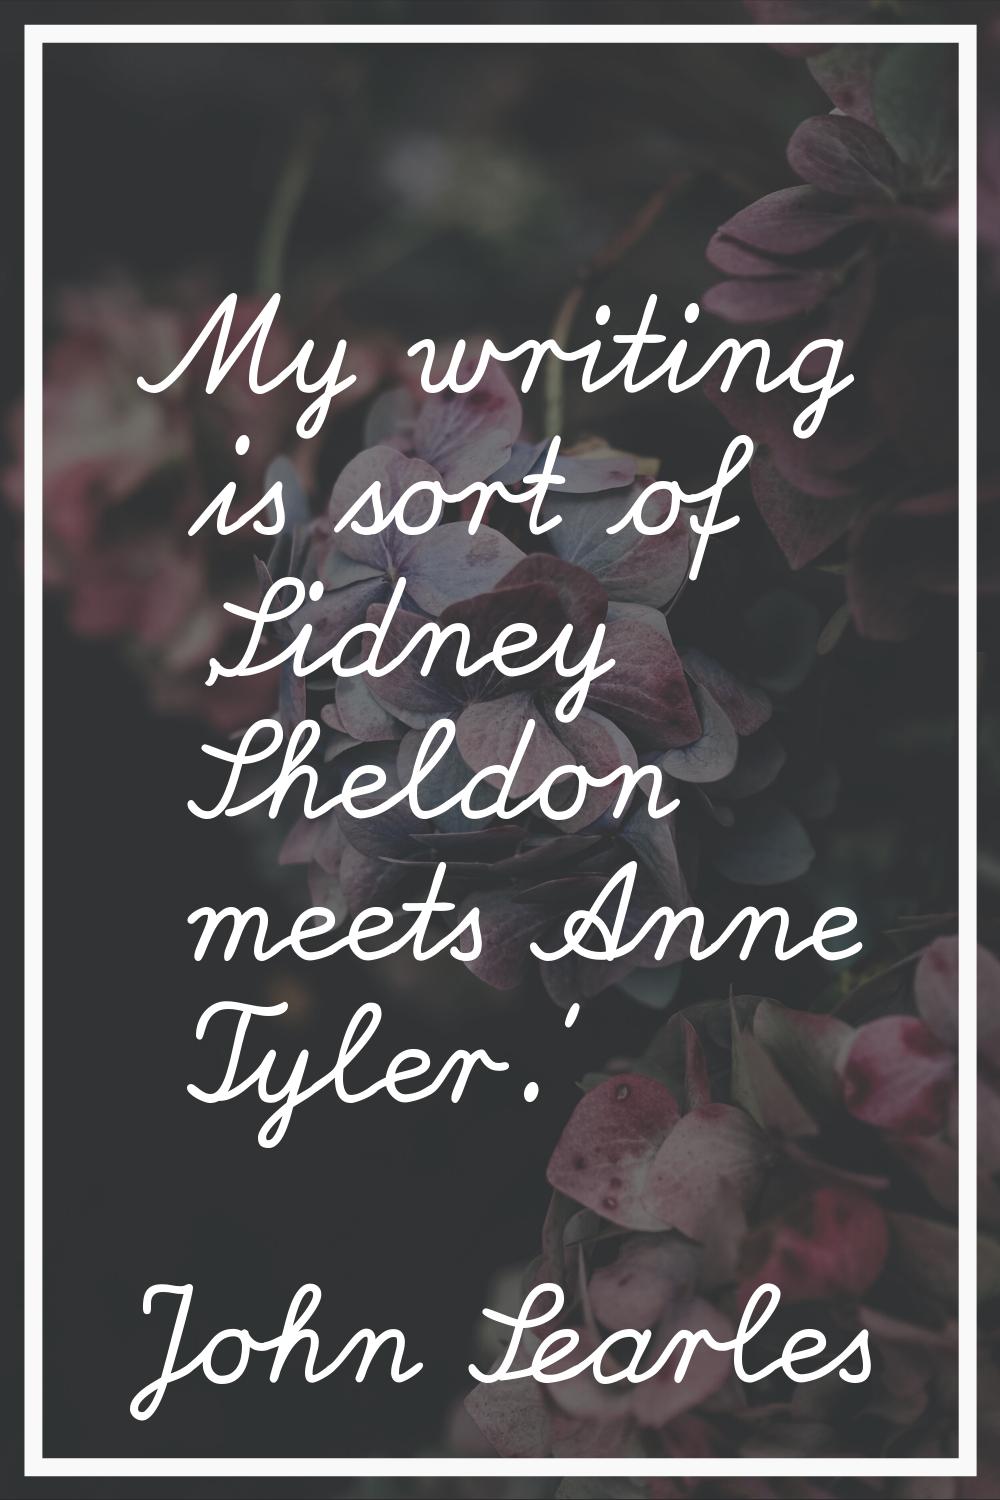 My writing is sort of 'Sidney Sheldon meets Anne Tyler.'